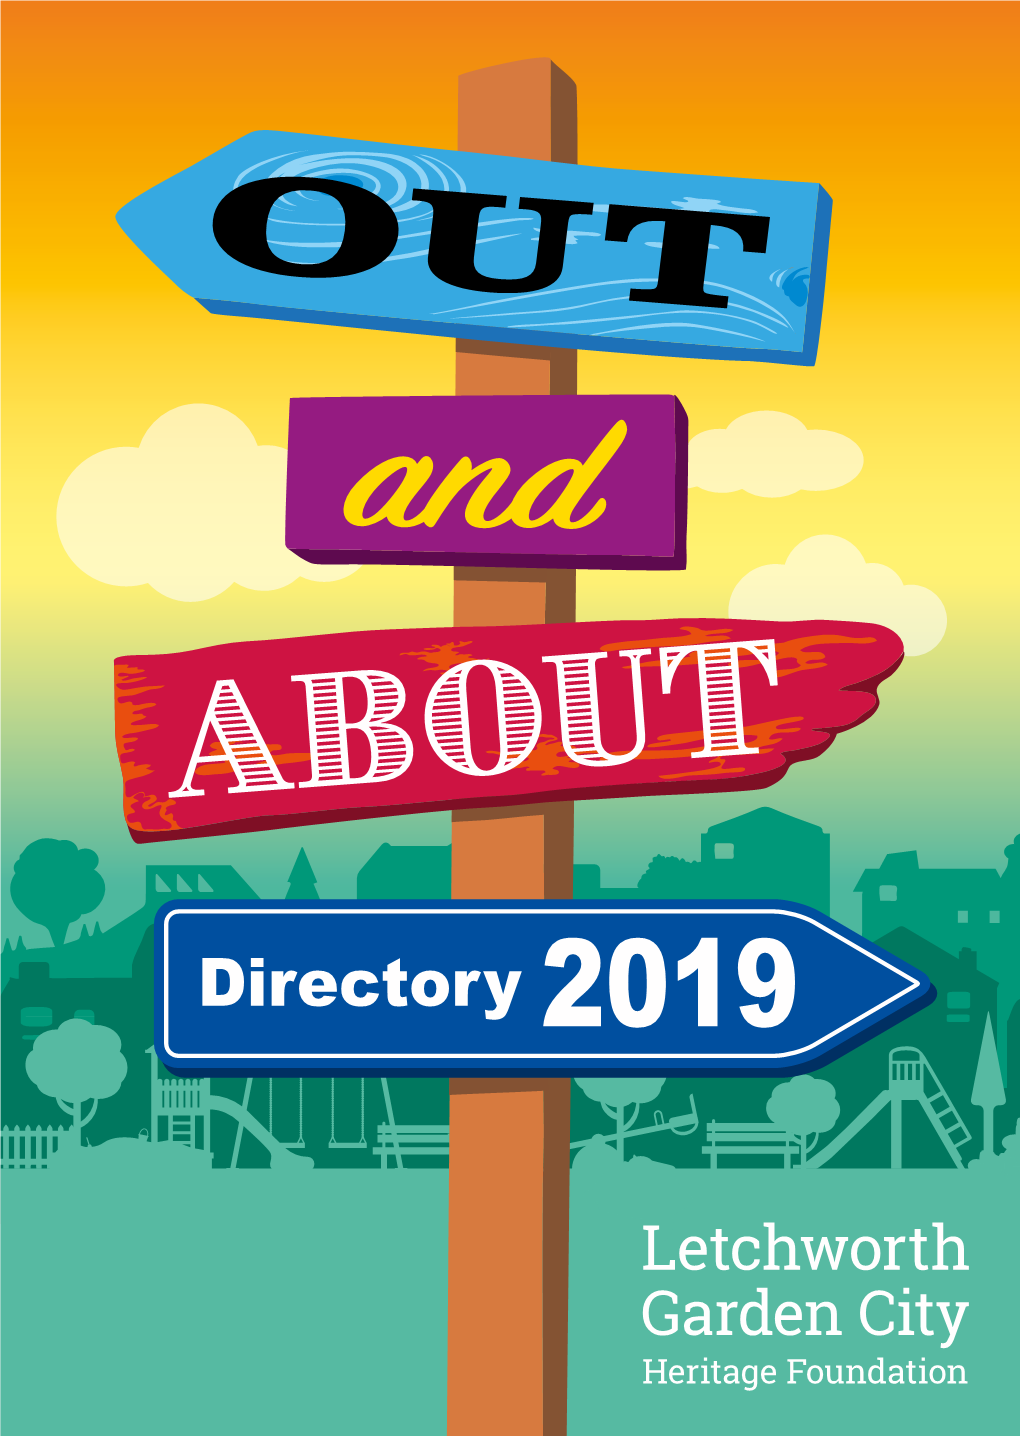 Directory 2019 4 27